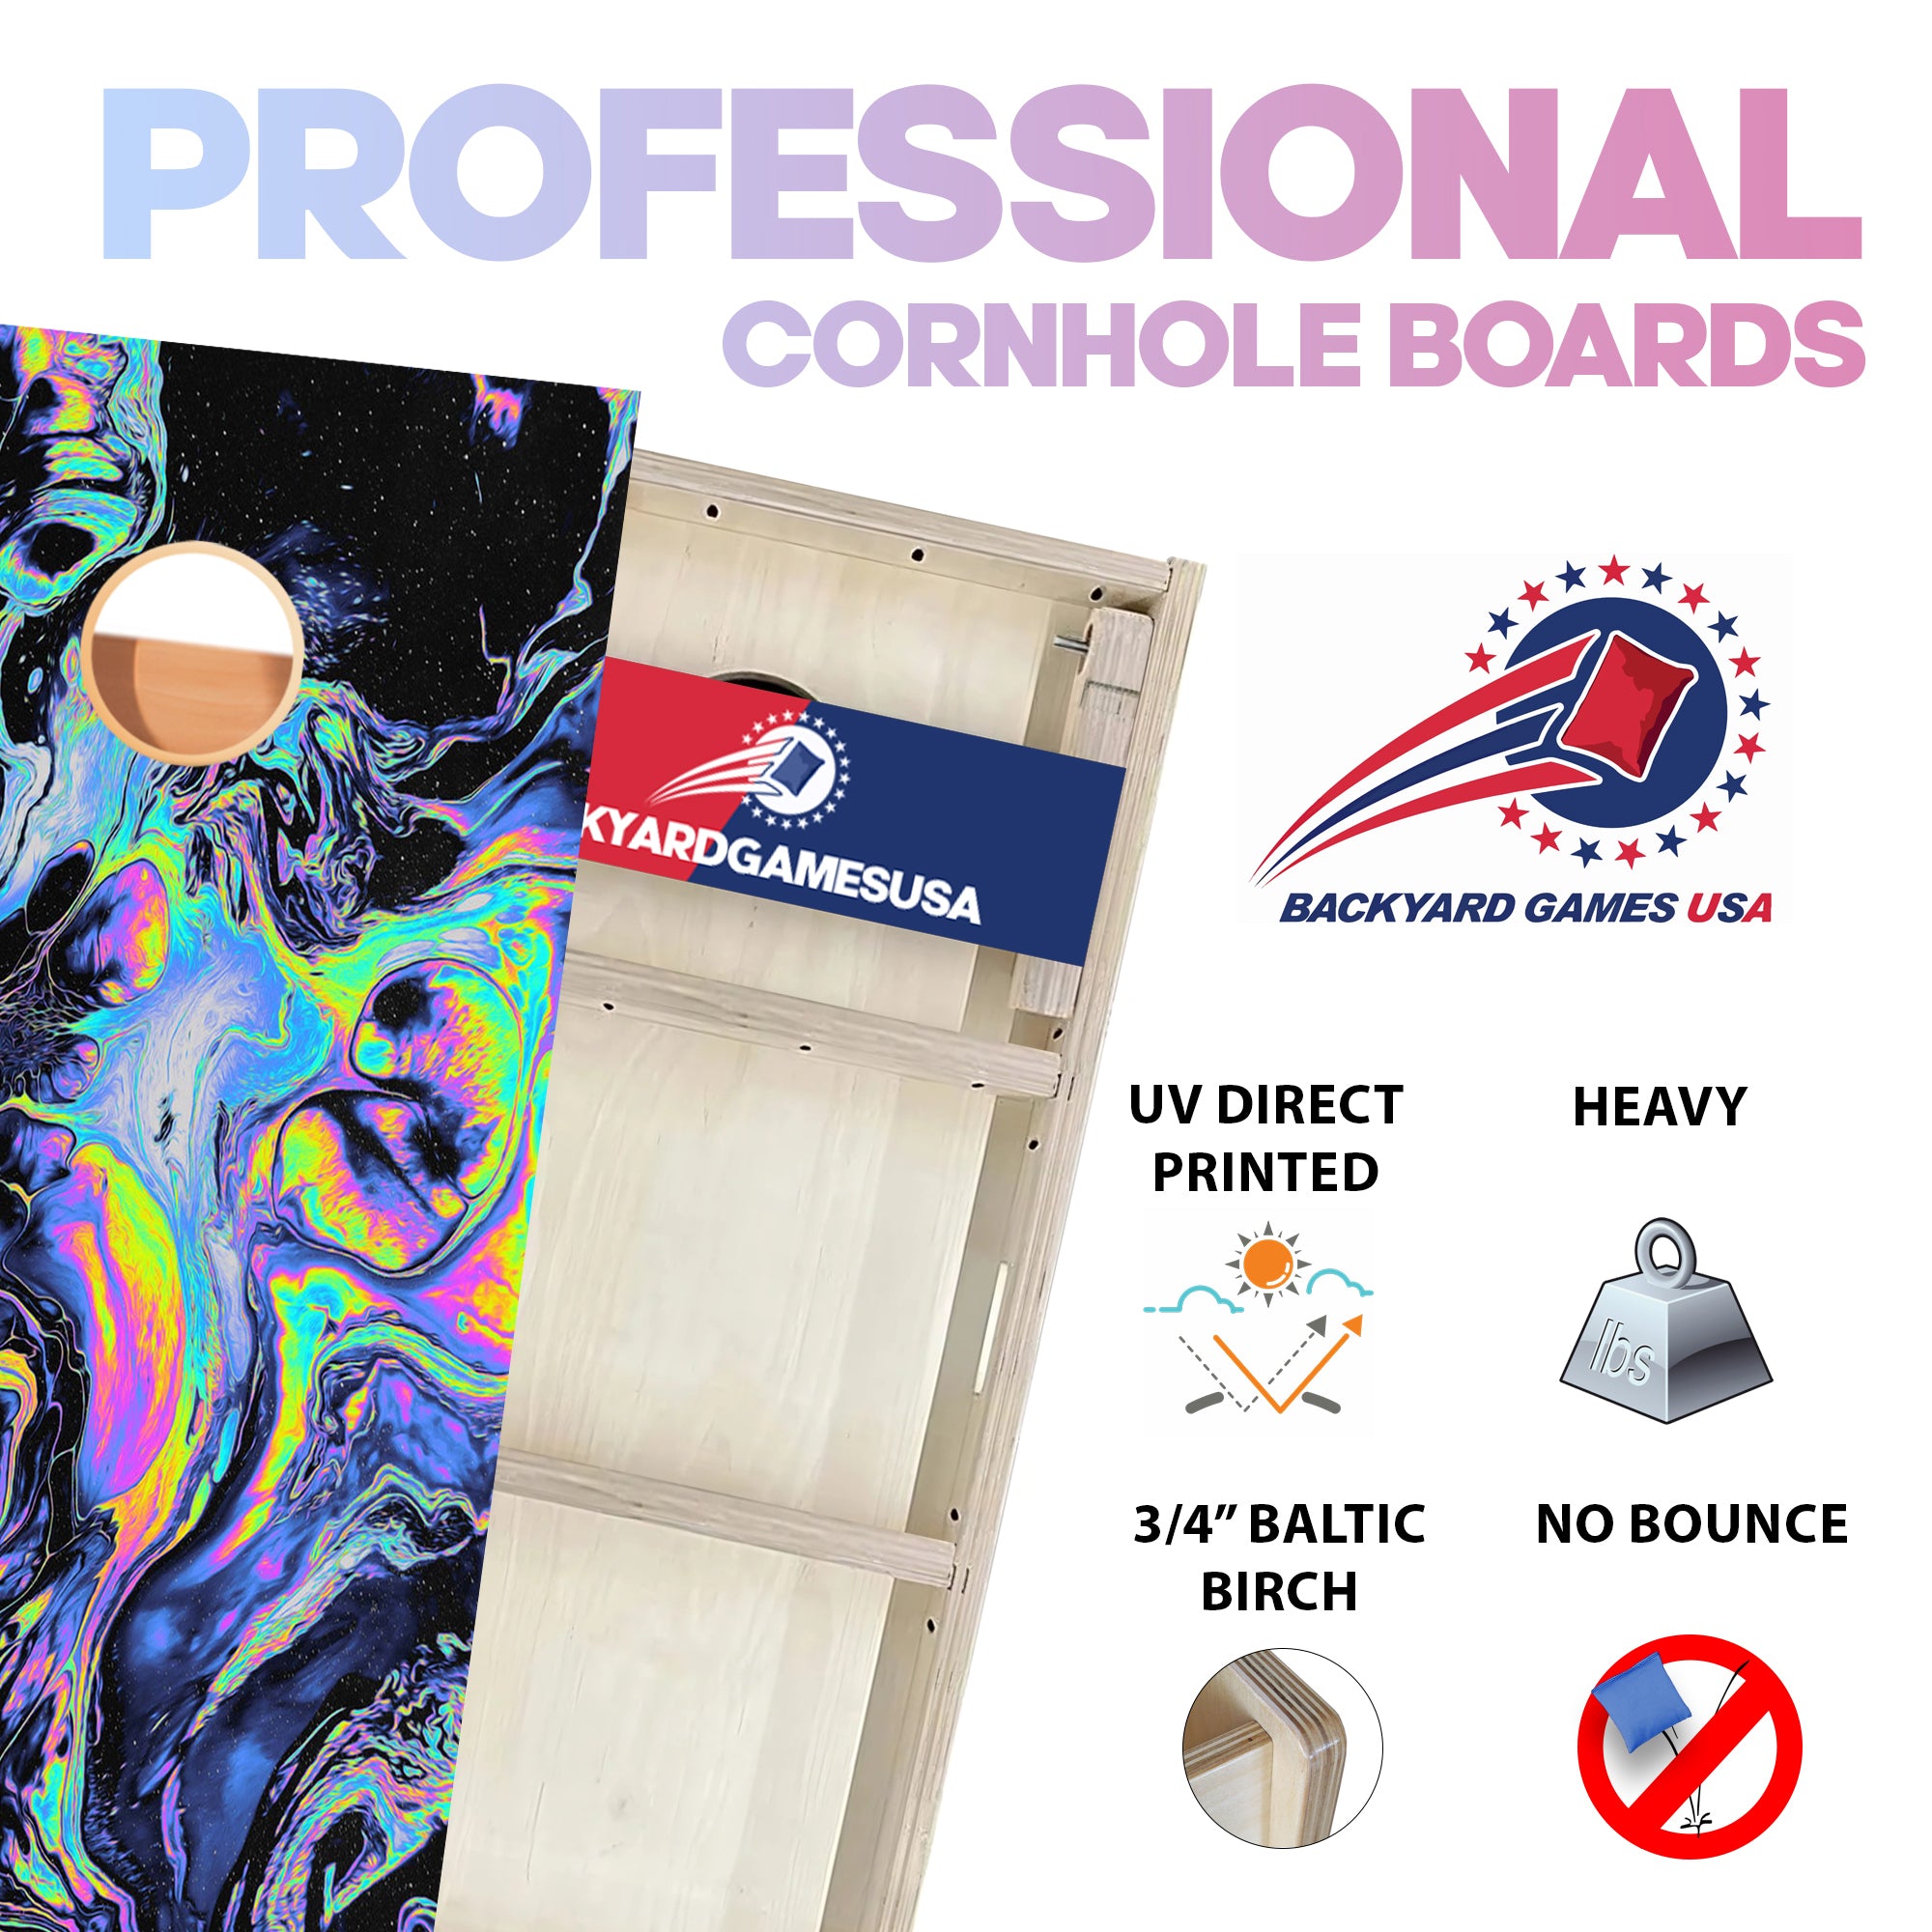 Rainbow Oil Professional Cornhole Boards